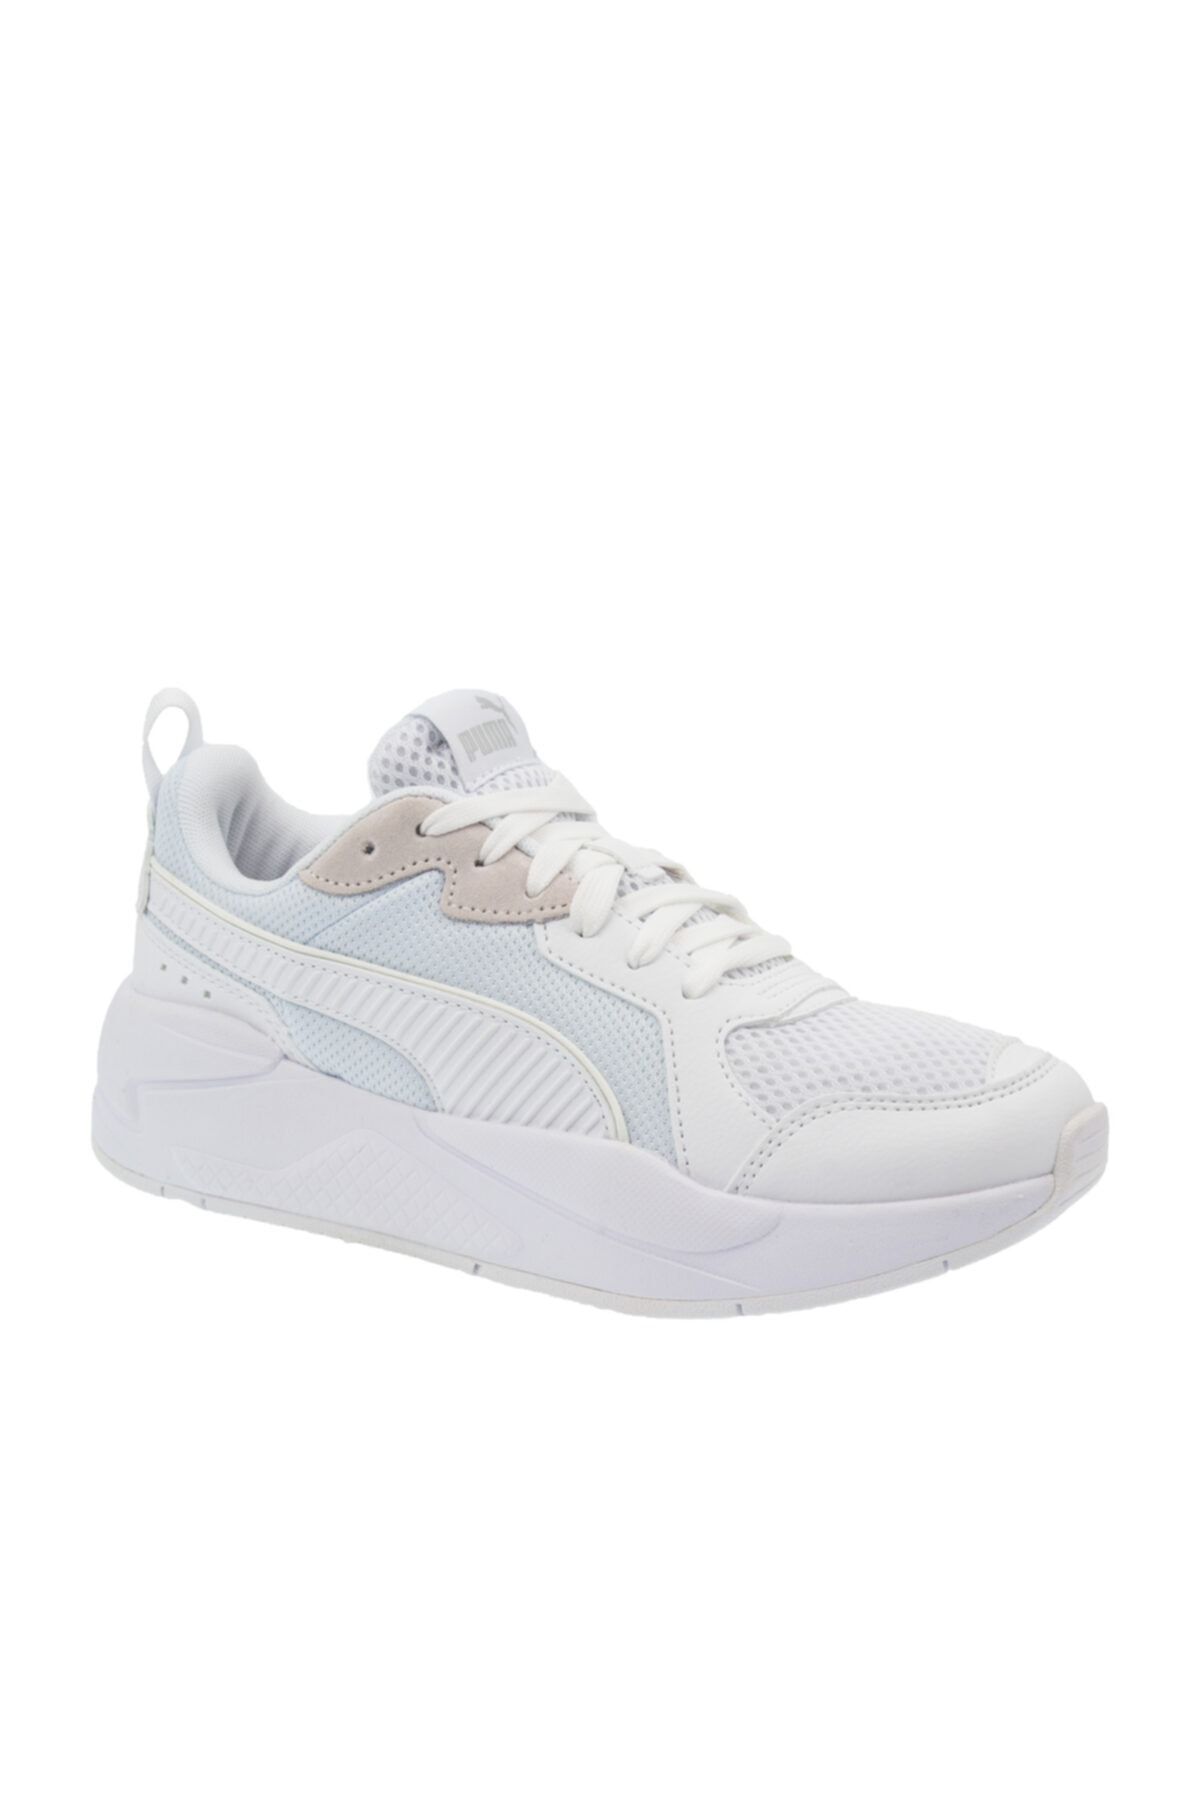 Puma X-RAY Beyaz Erkek Sneaker Ayakkabı 101119277